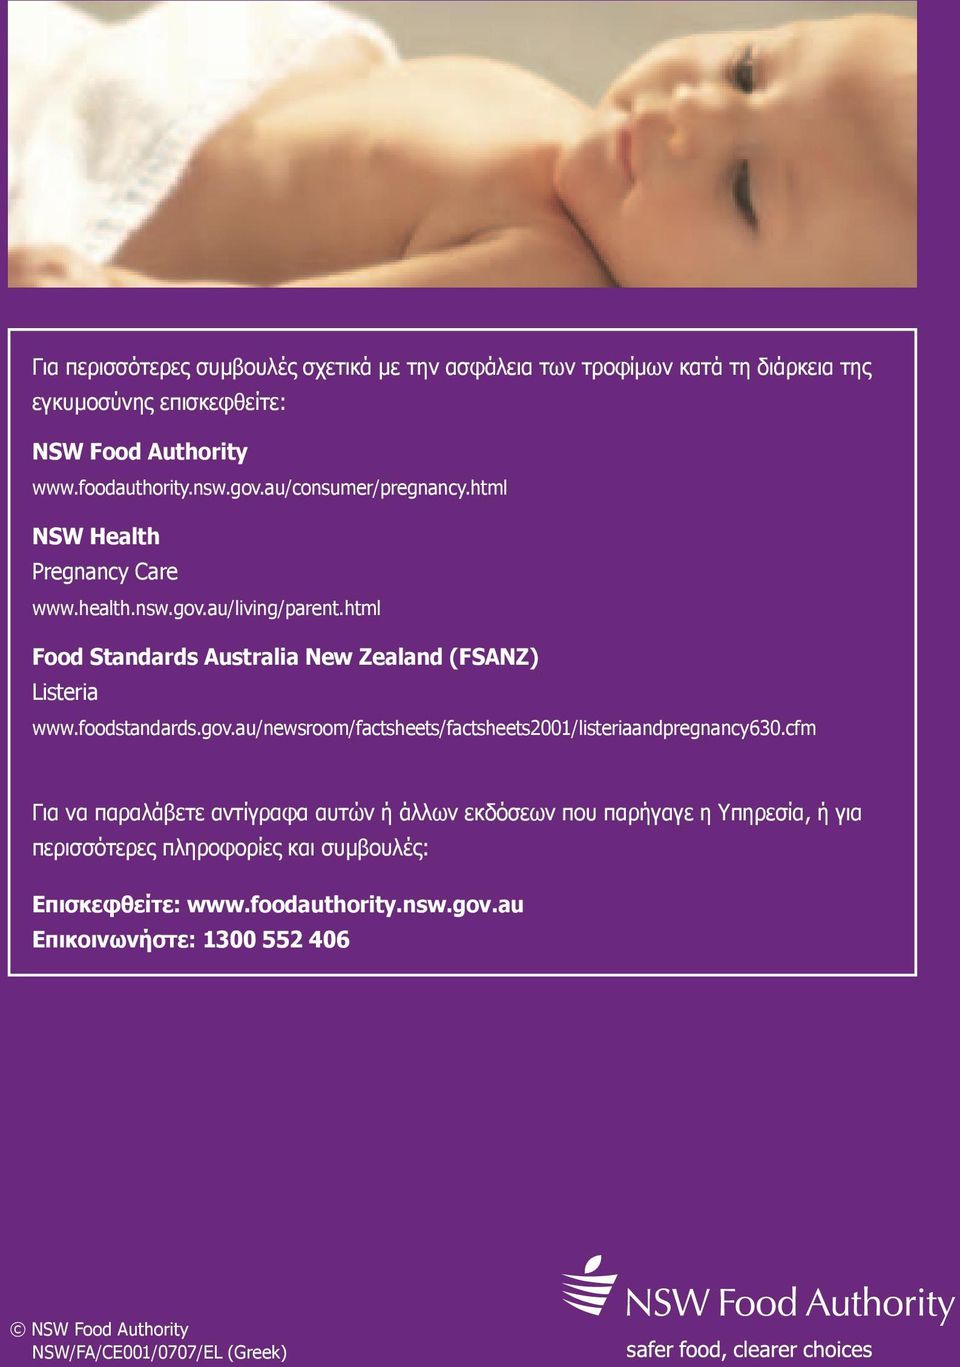 foodstandards.gov.au/newsroom/factsheets/factsheets2001/listeriaandpregnancy630.